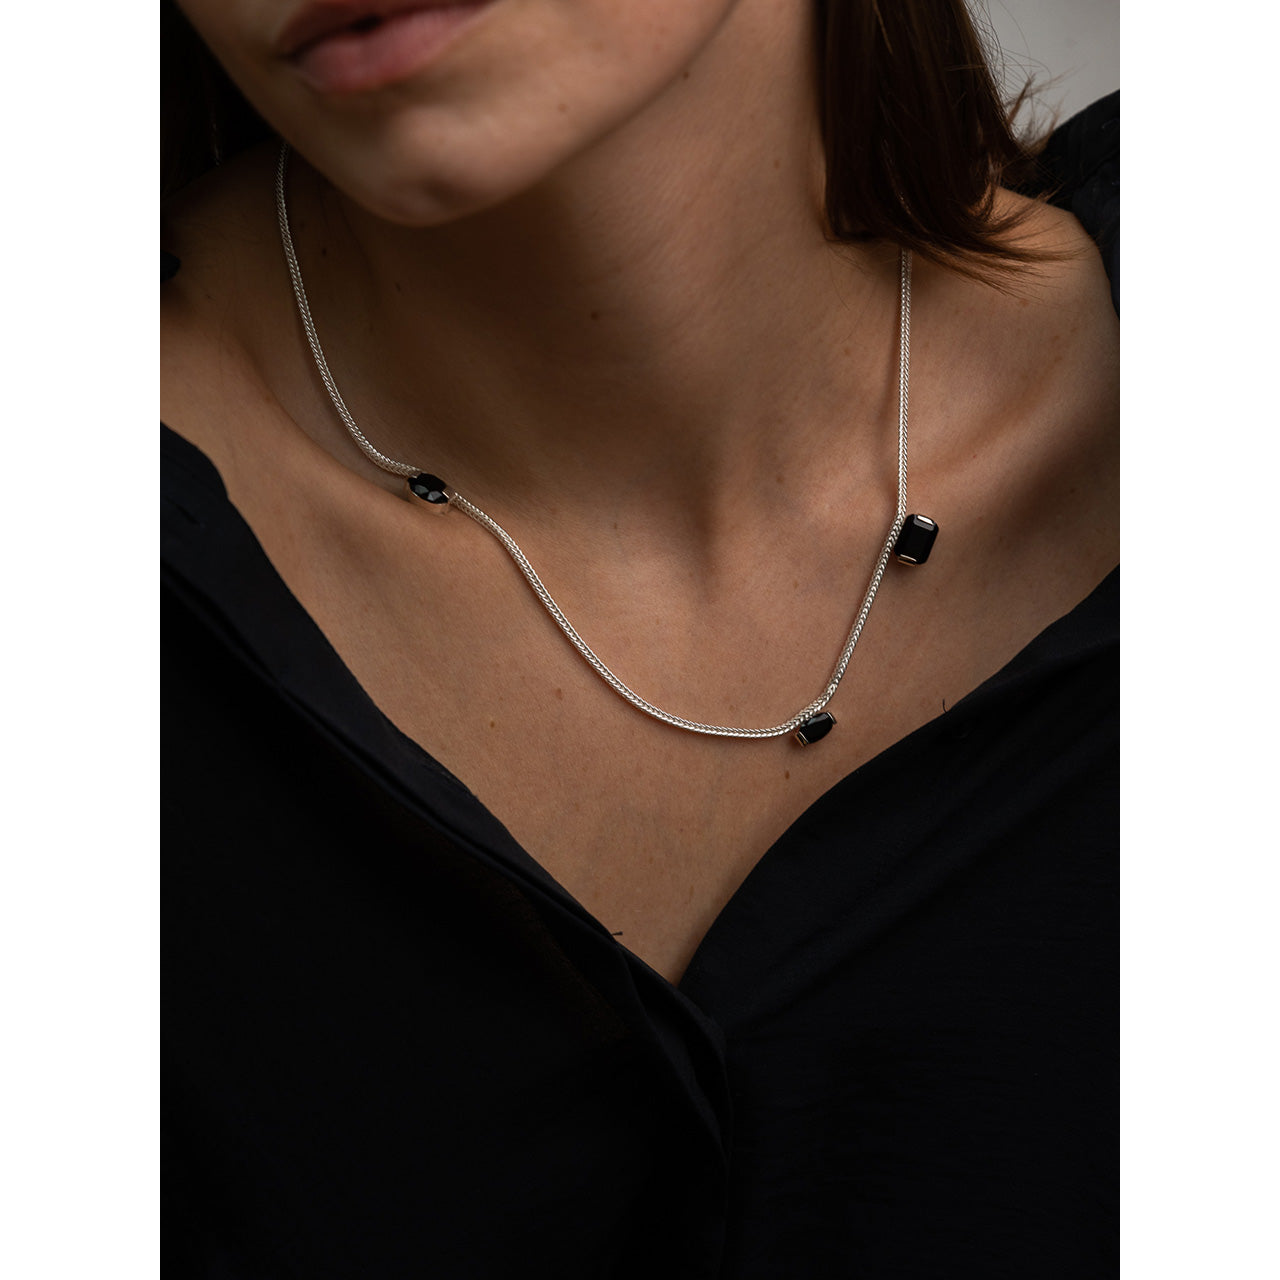 serif necklace with onyx